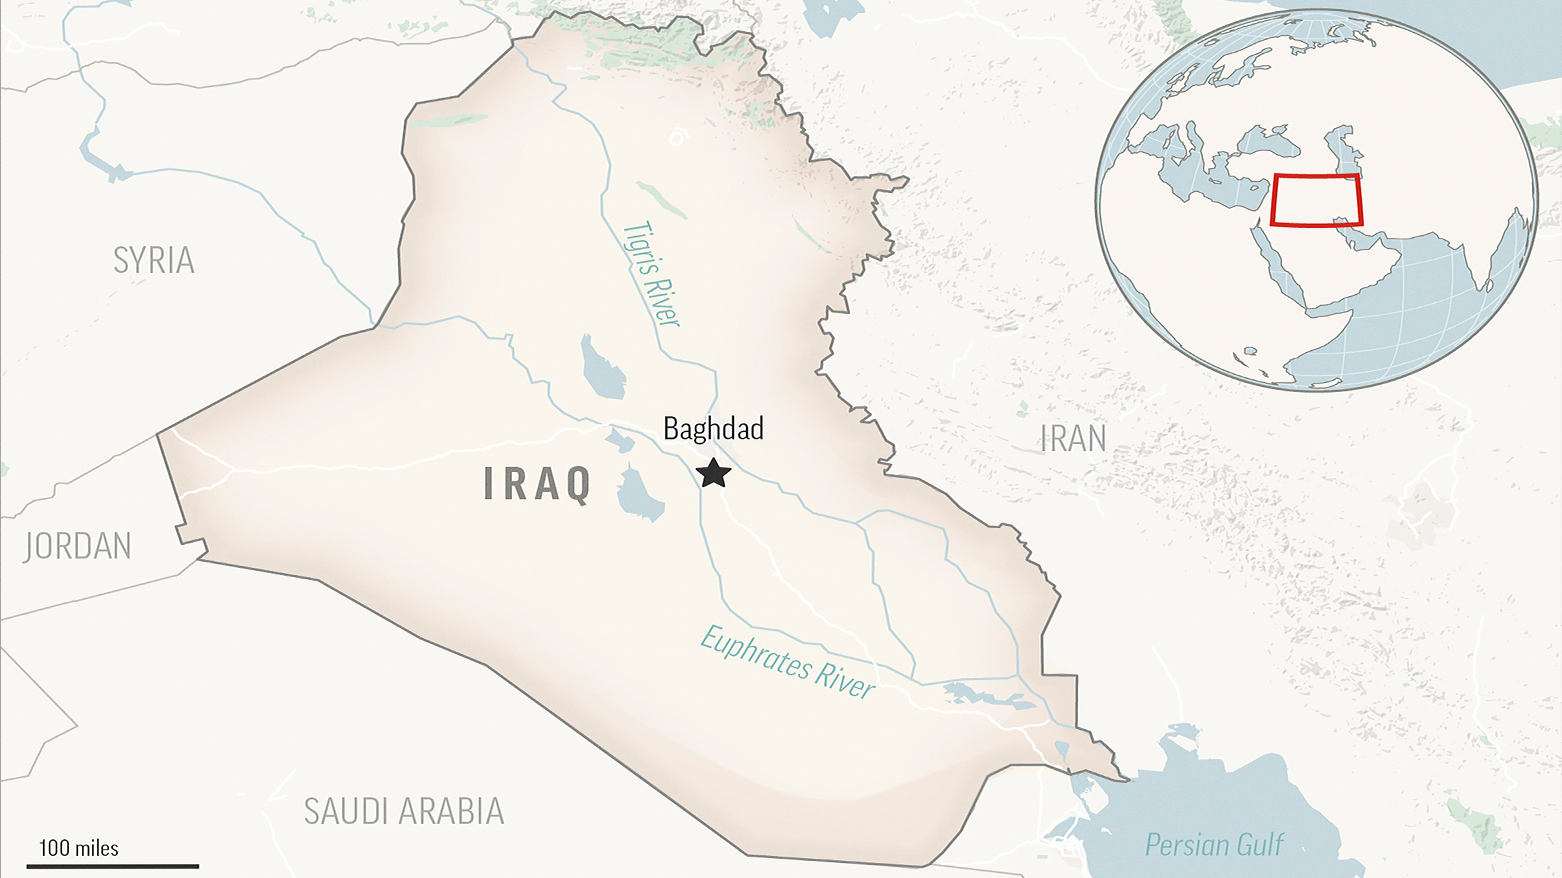 Iraq impacts by severe land degradation